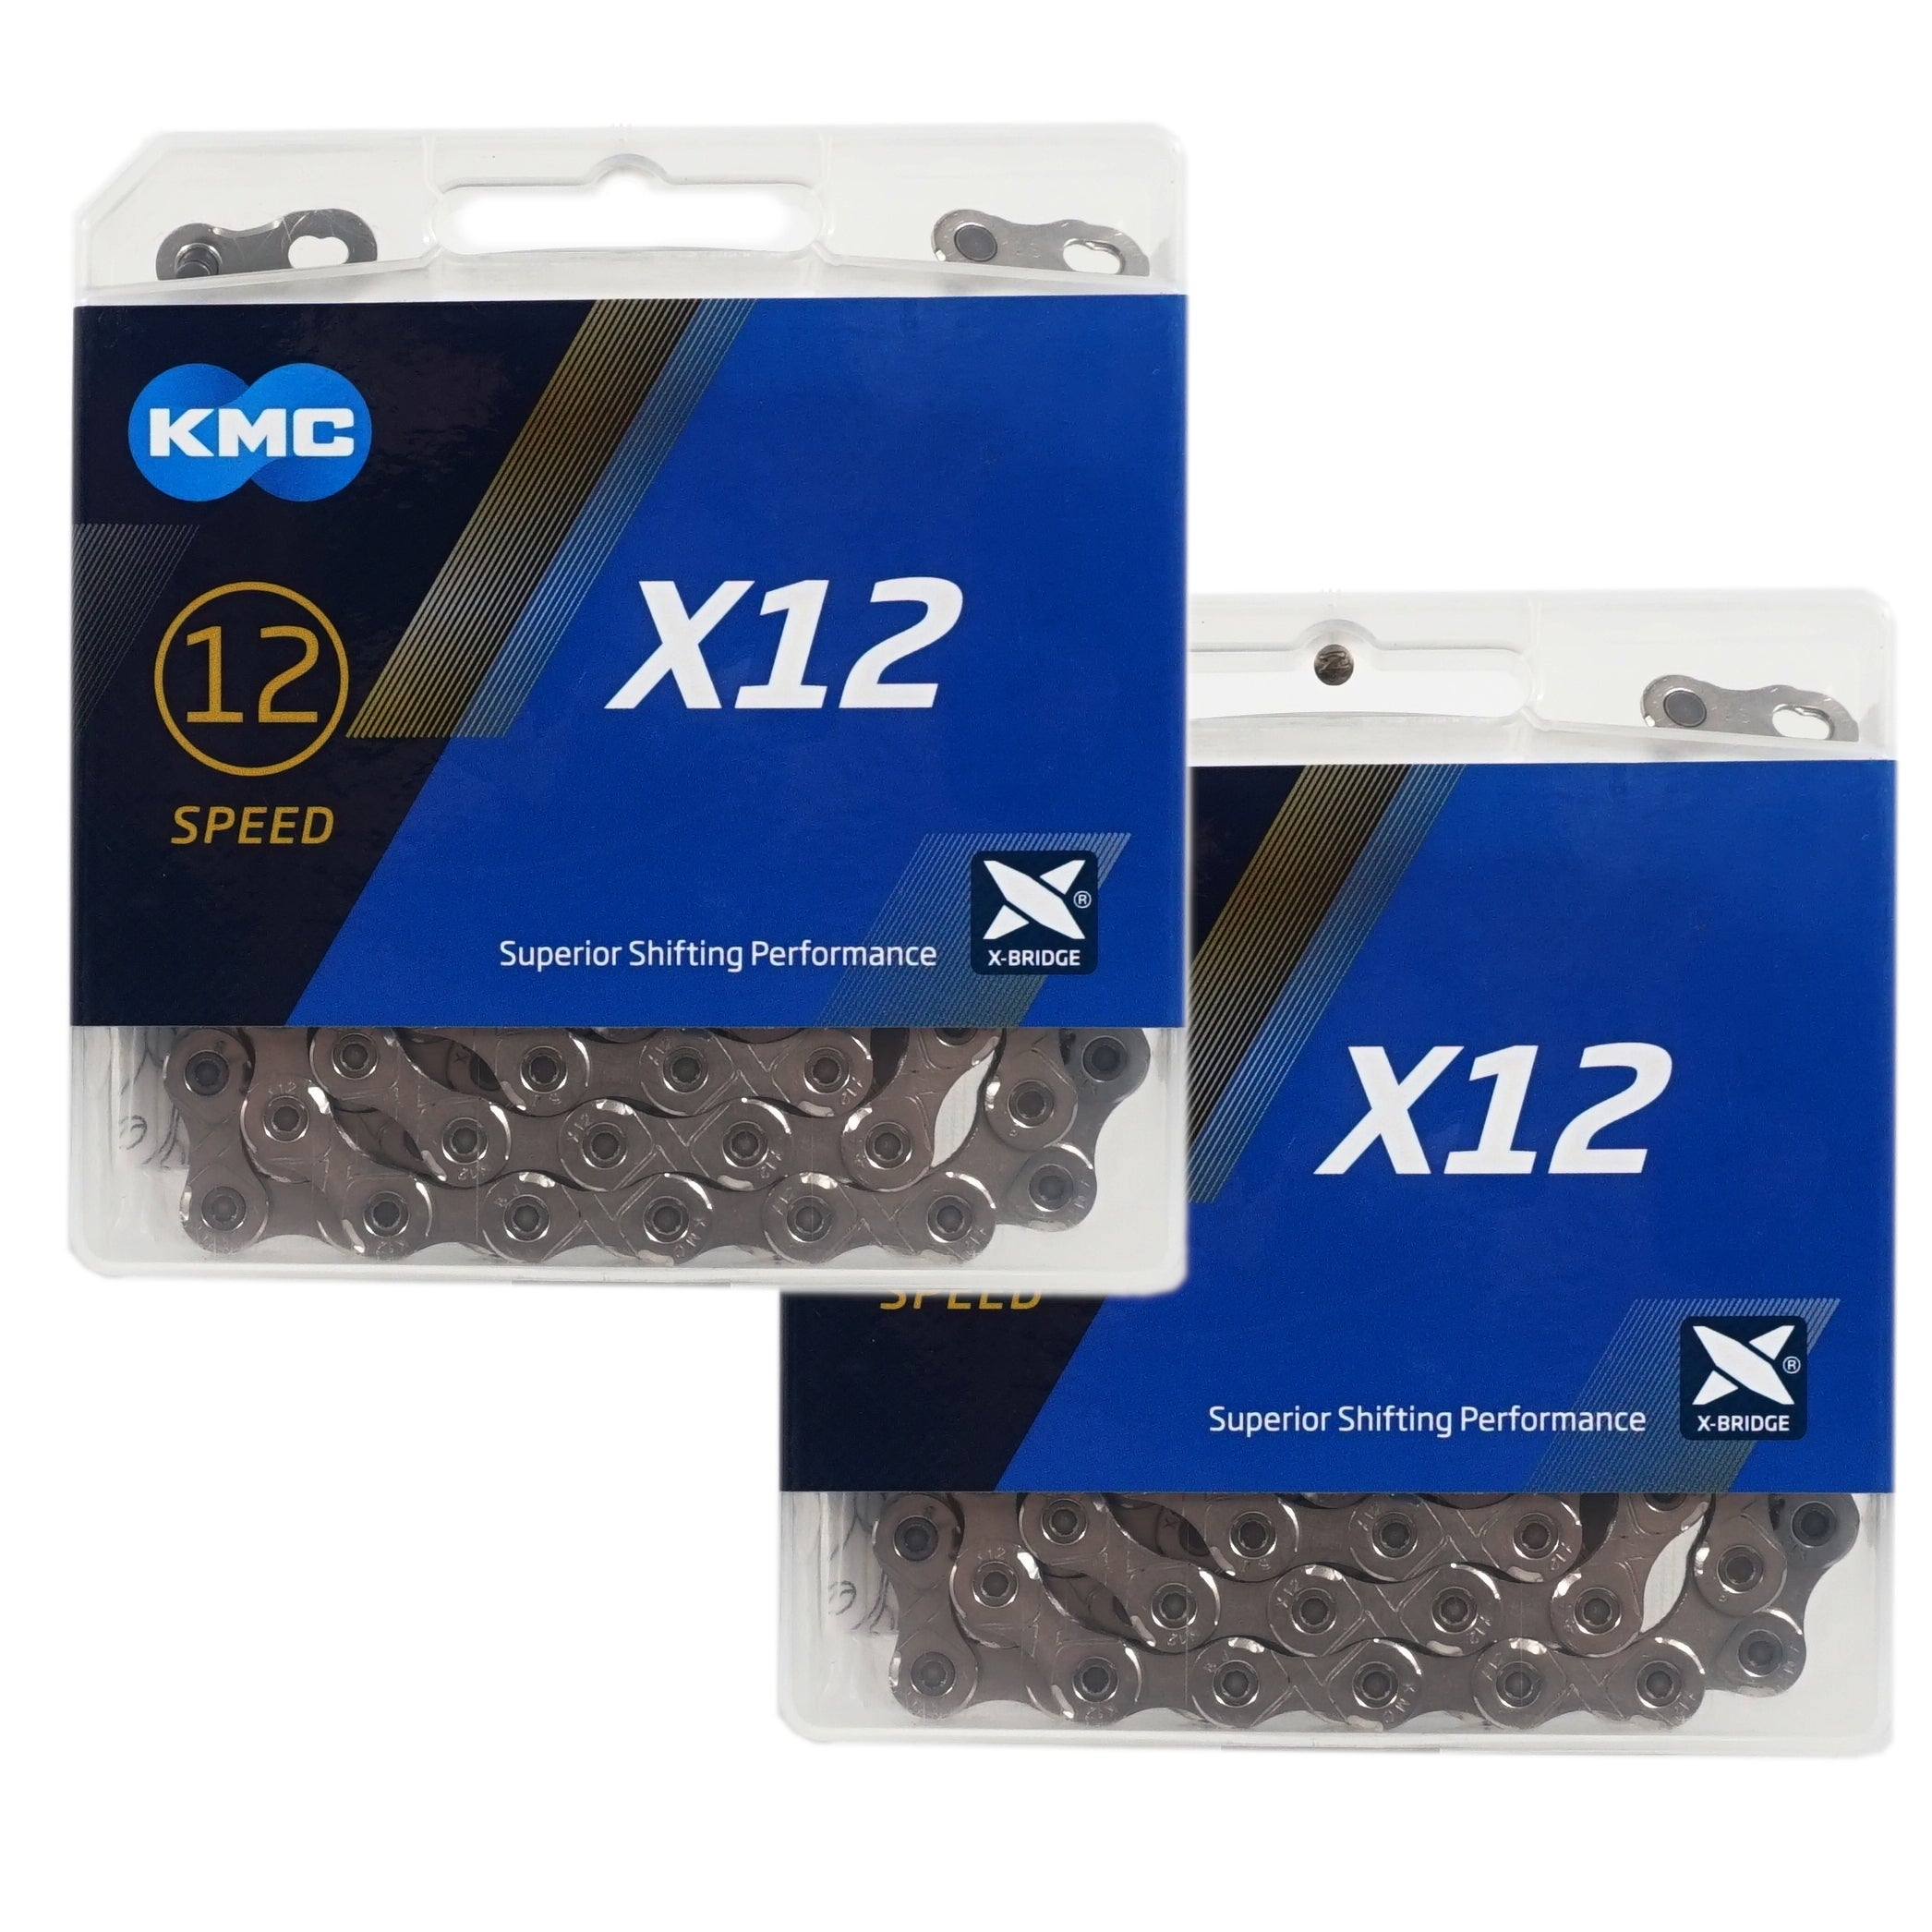 KMC X12 12-speed Chain - TheBikesmiths